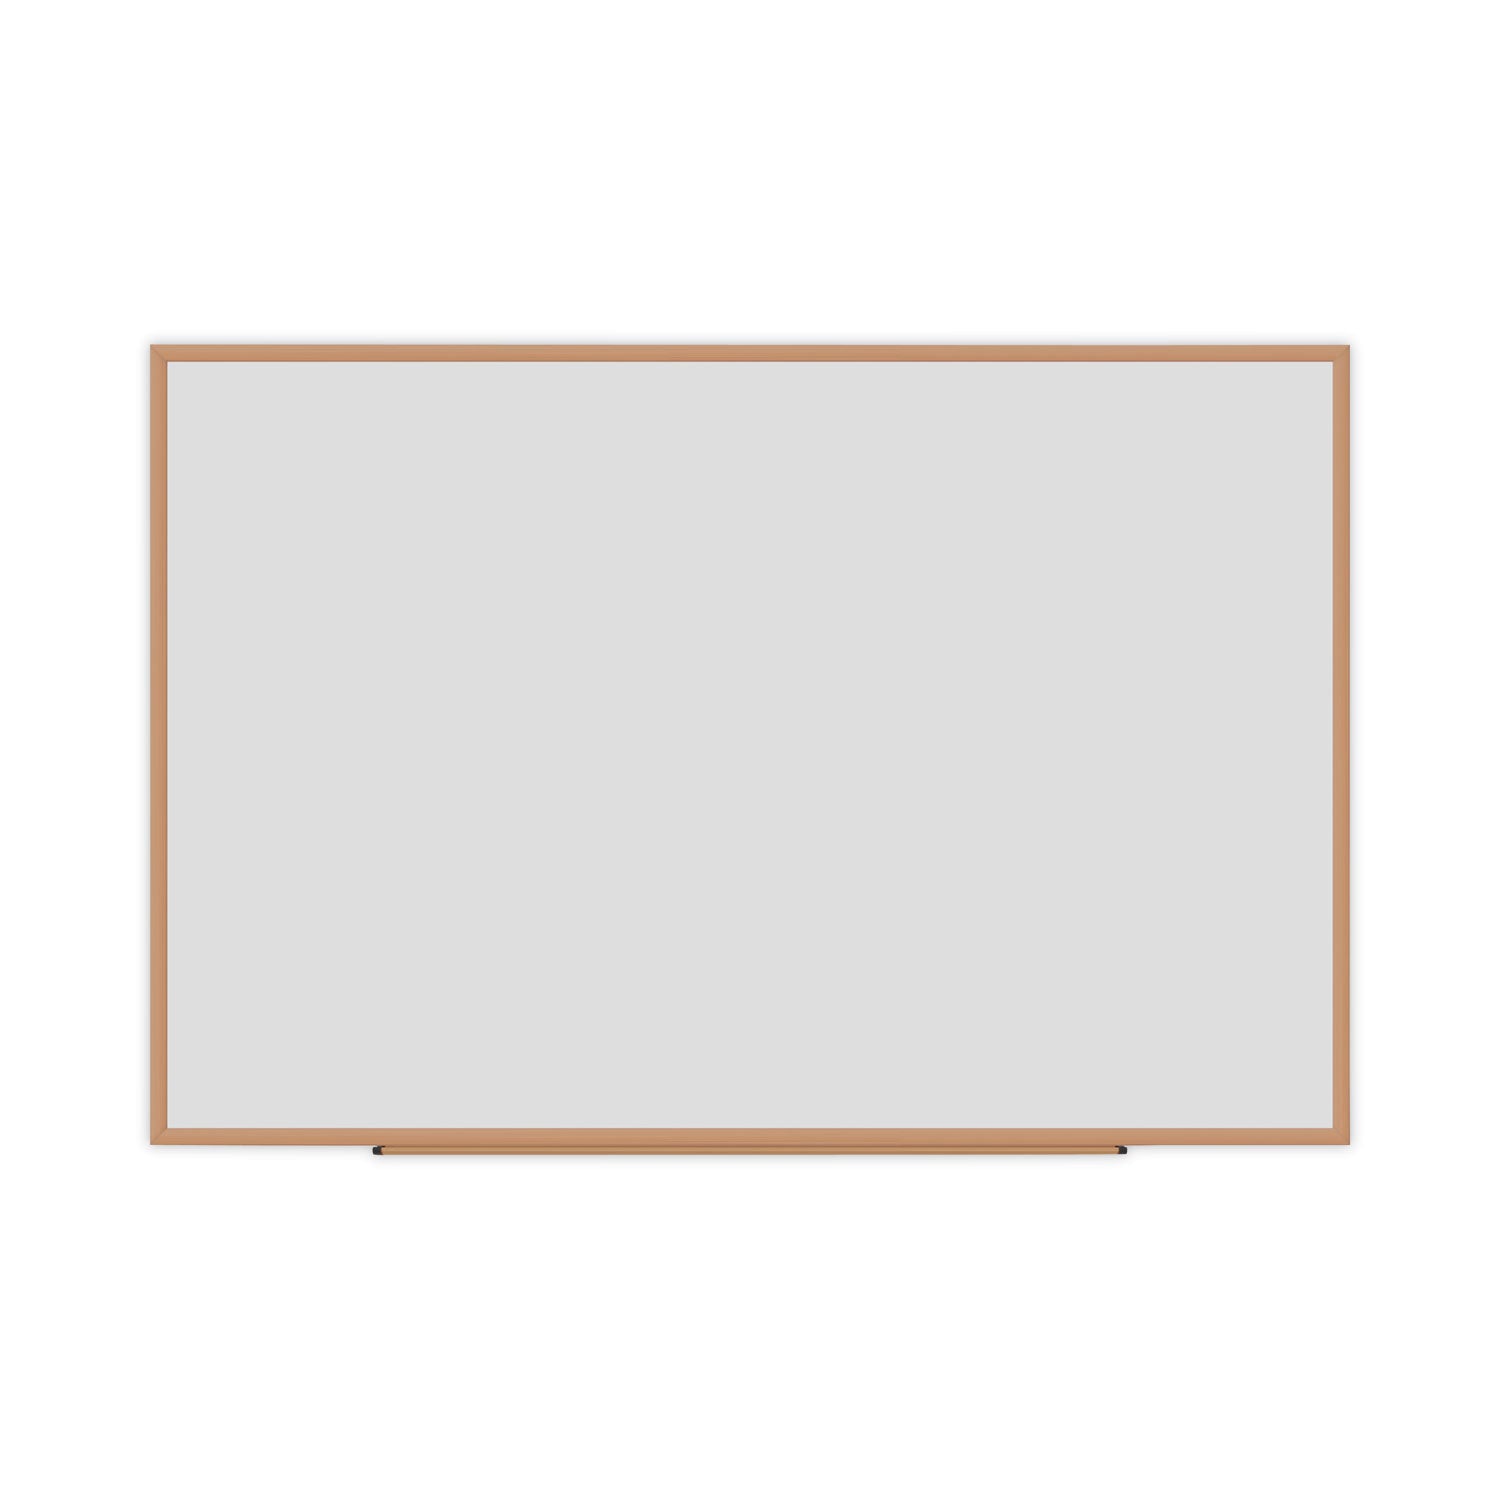 Deluxe Melamine Dry Erase Board, 72 x 48, Melamine White Surface, Oak Fiberboard Frame - 